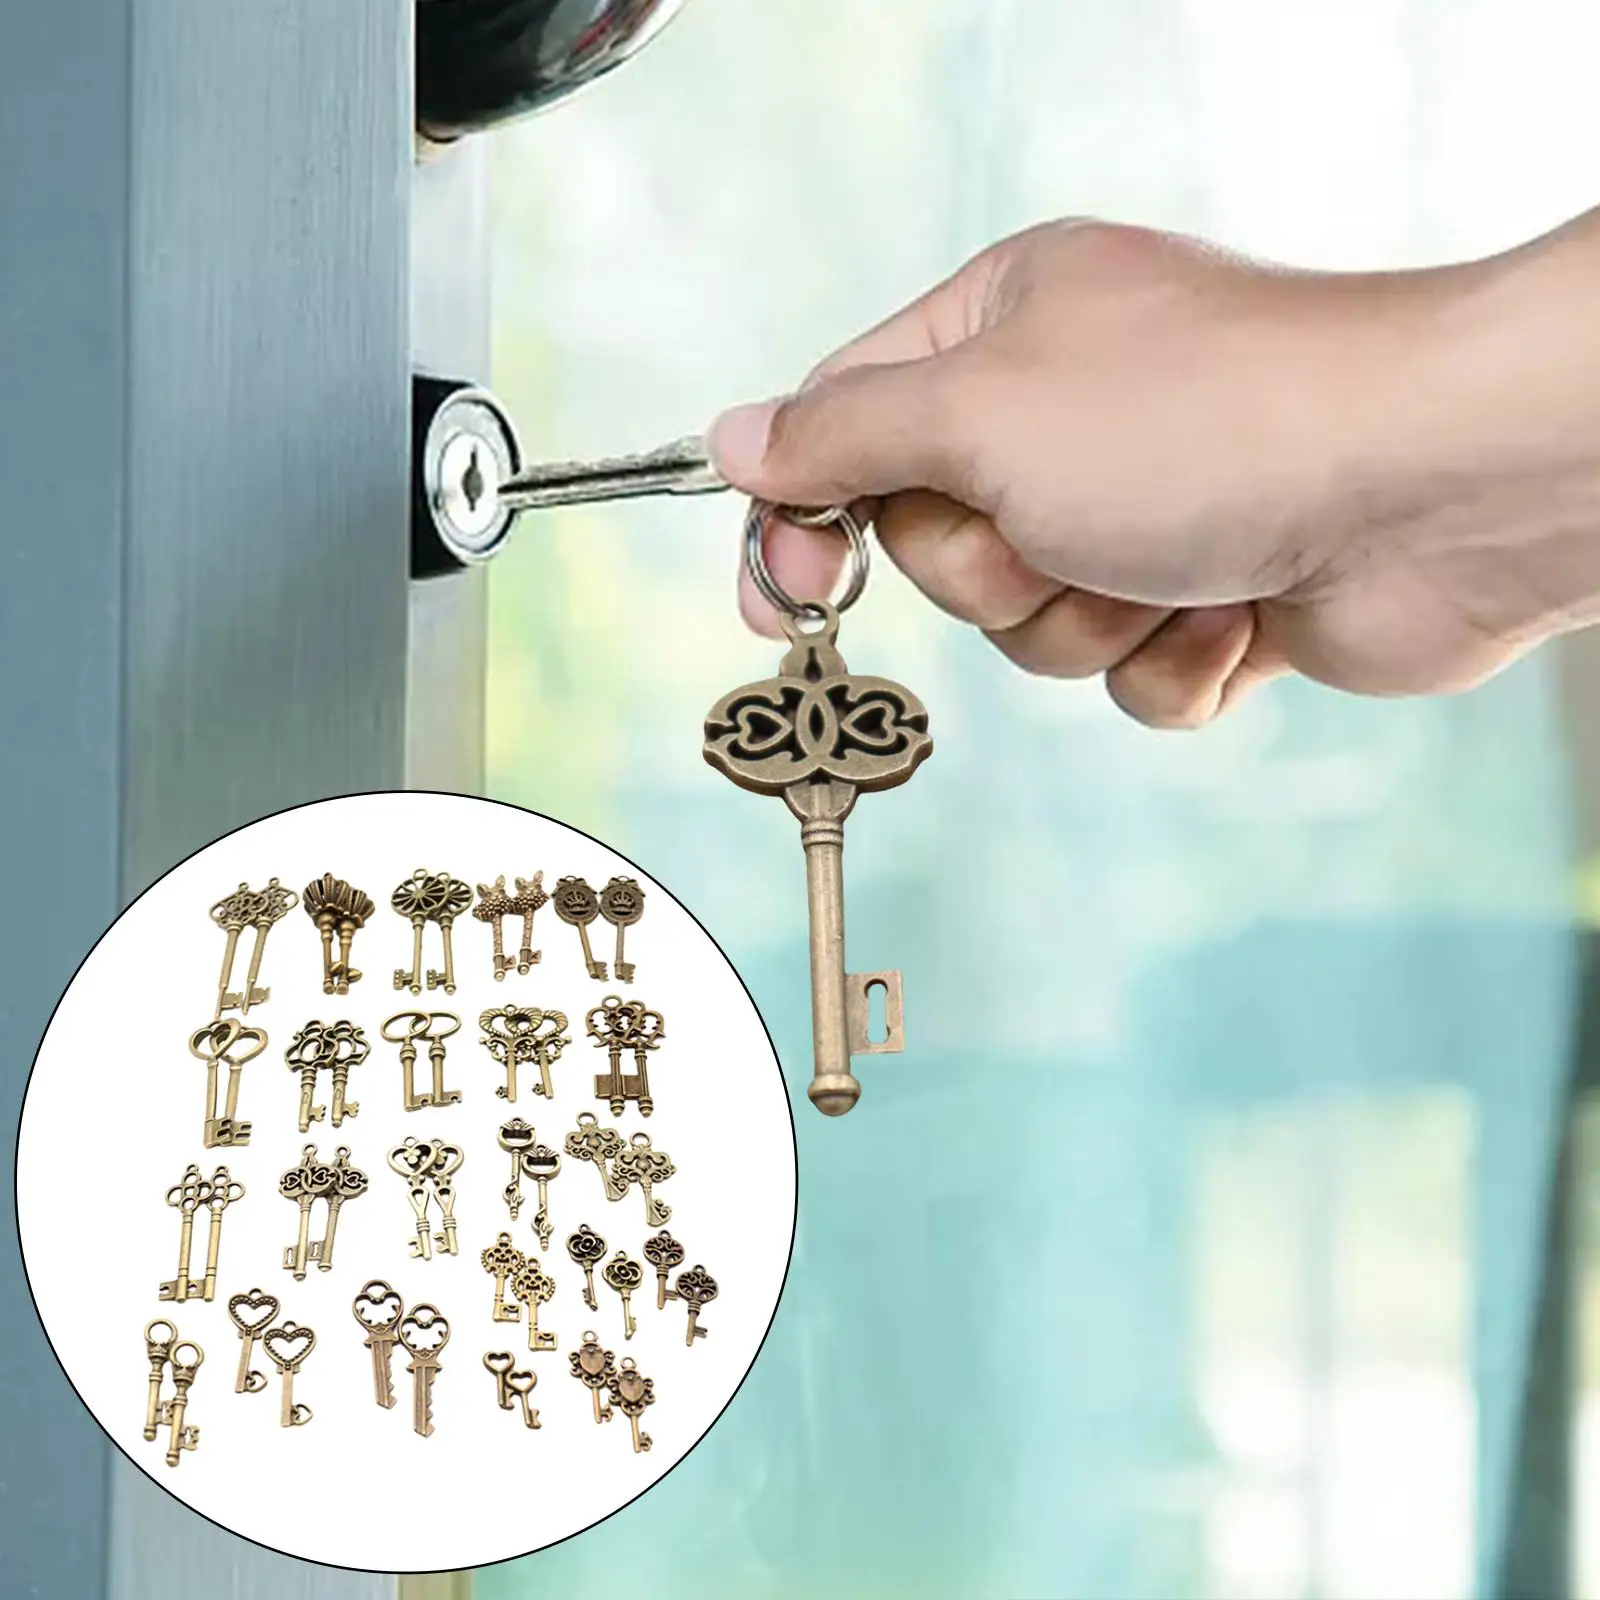 

46Pcs Skeleton Key Charms Skeleton Keys Bulk for Bracelet DIY Key Chains